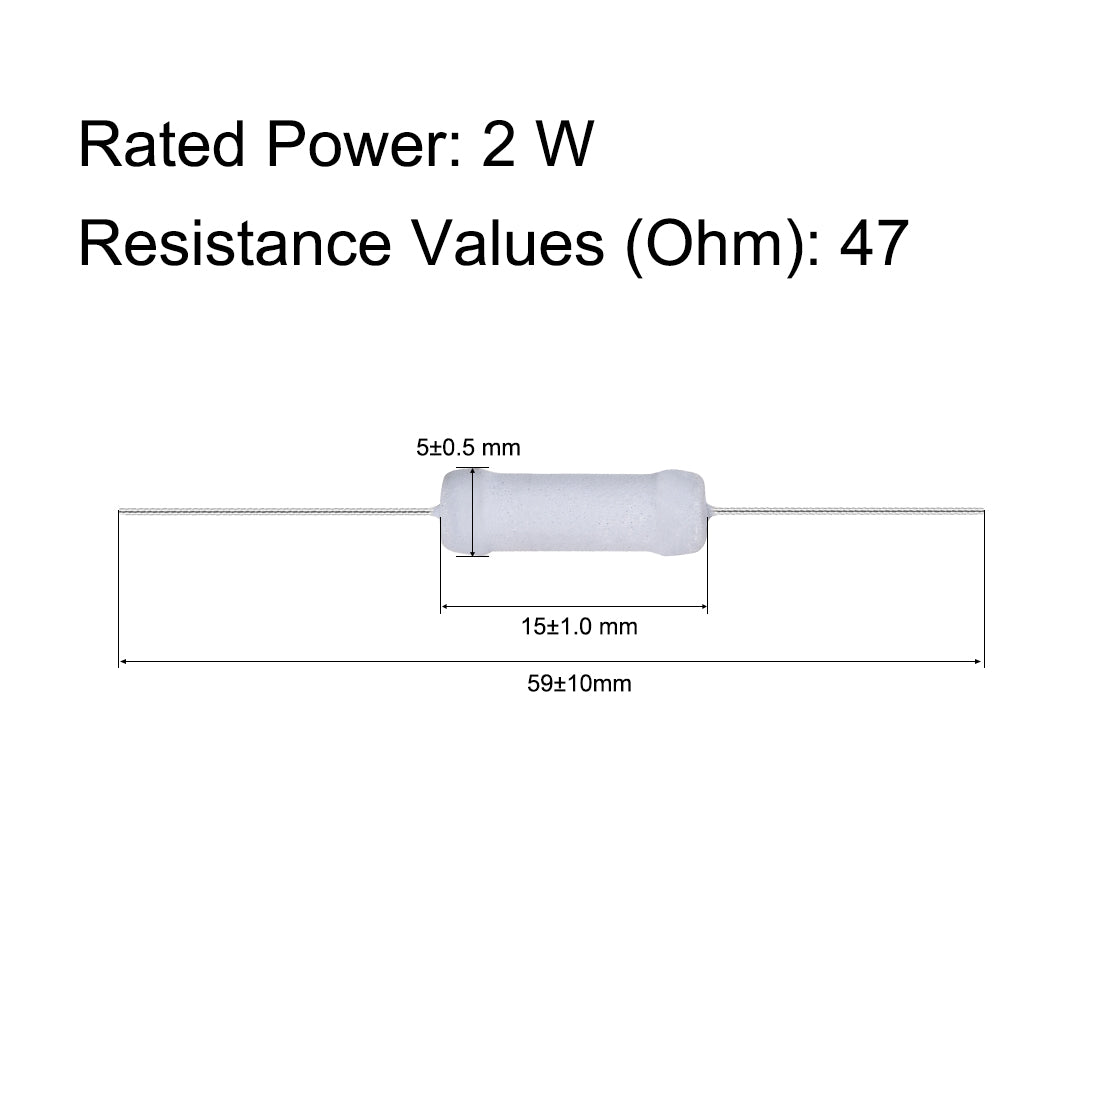 uxcell Uxcell 60pcs 2W 2 Watt Metal Oxide Film Resistor Axile Lead 47 Ohm ±5% Tolerance